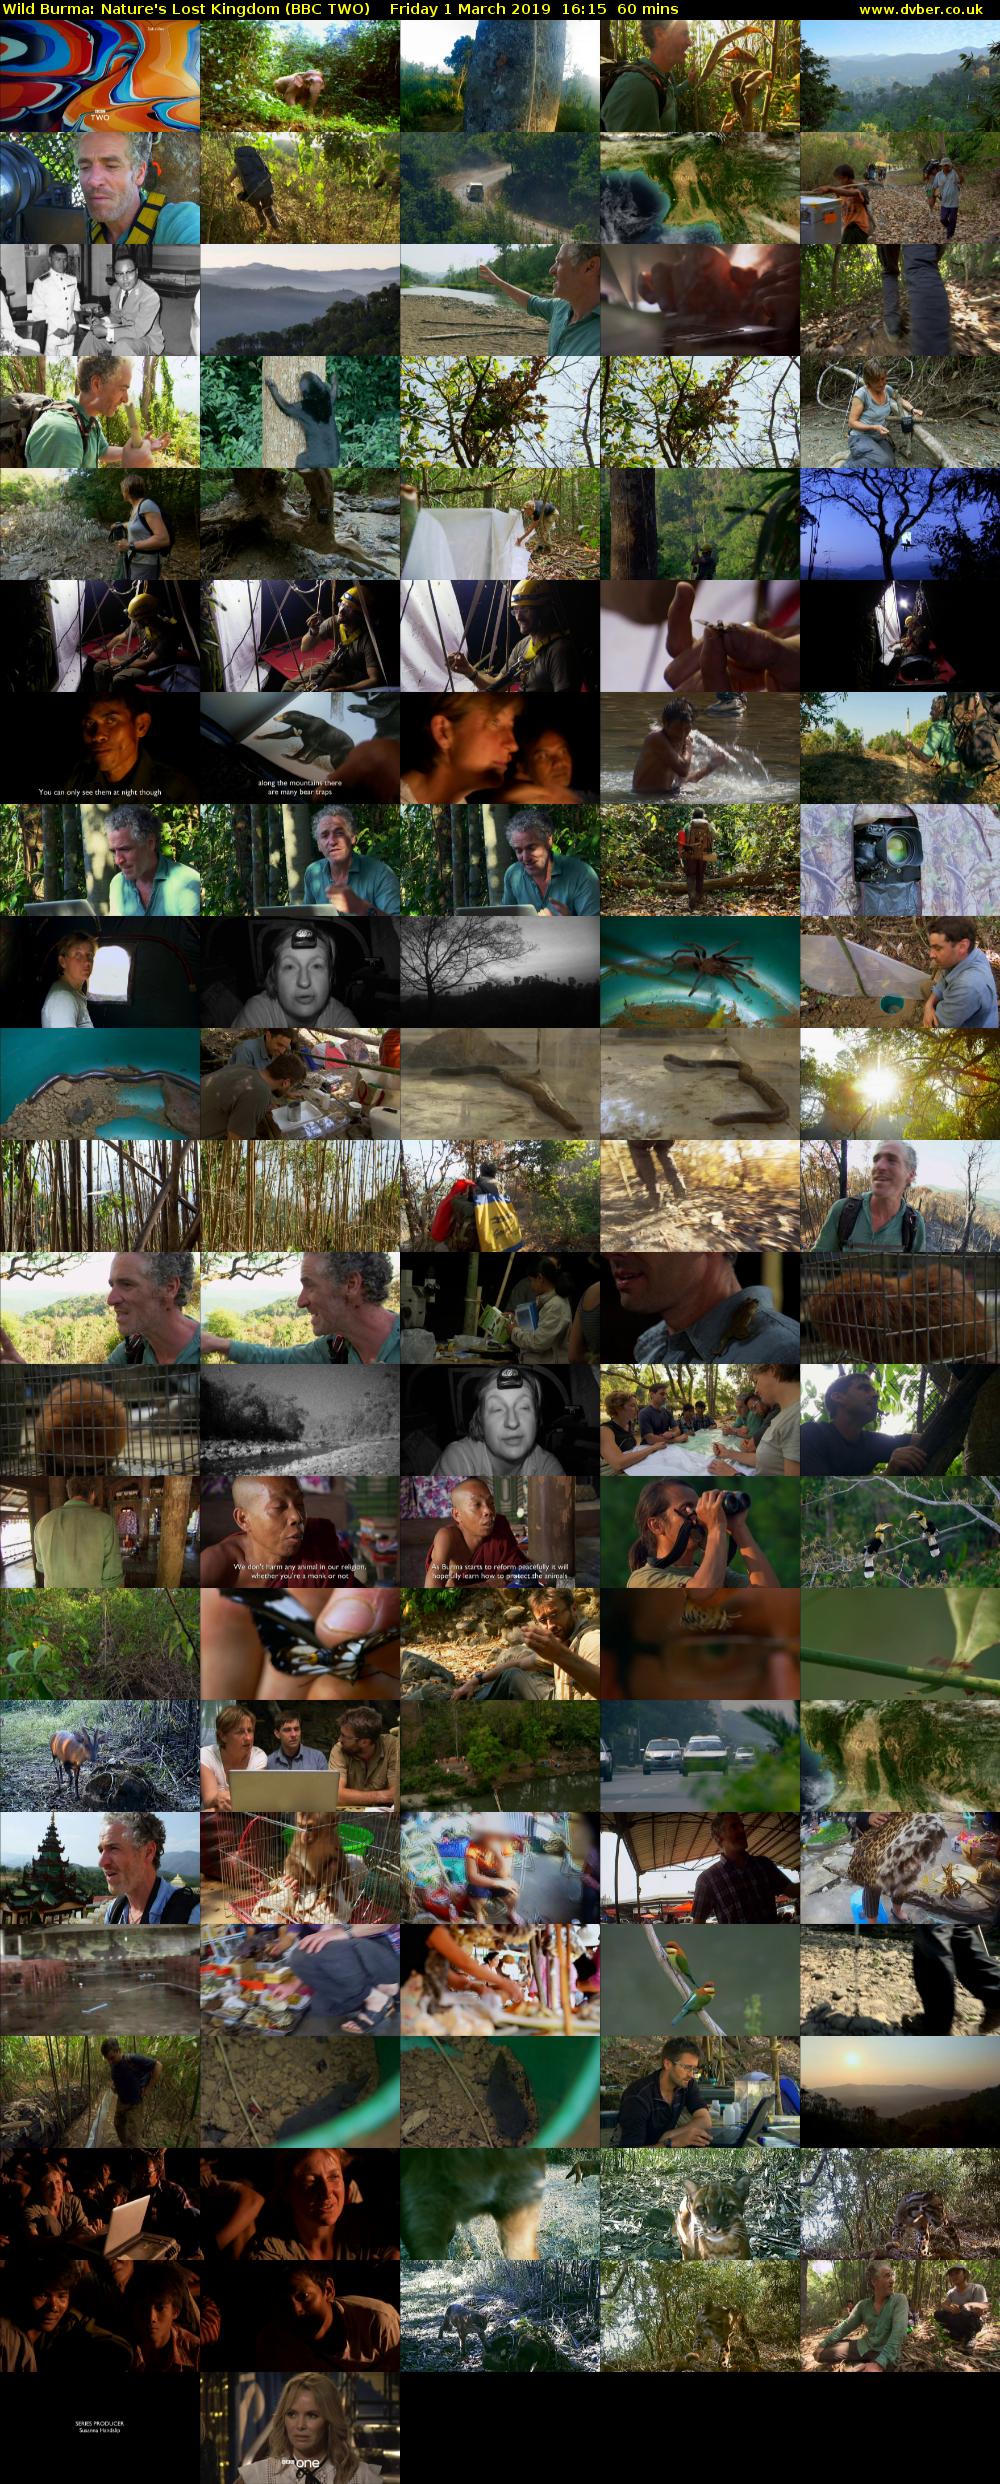 Wild Burma: Nature's Lost Kingdom (BBC TWO) Friday 1 March 2019 16:15 - 17:15